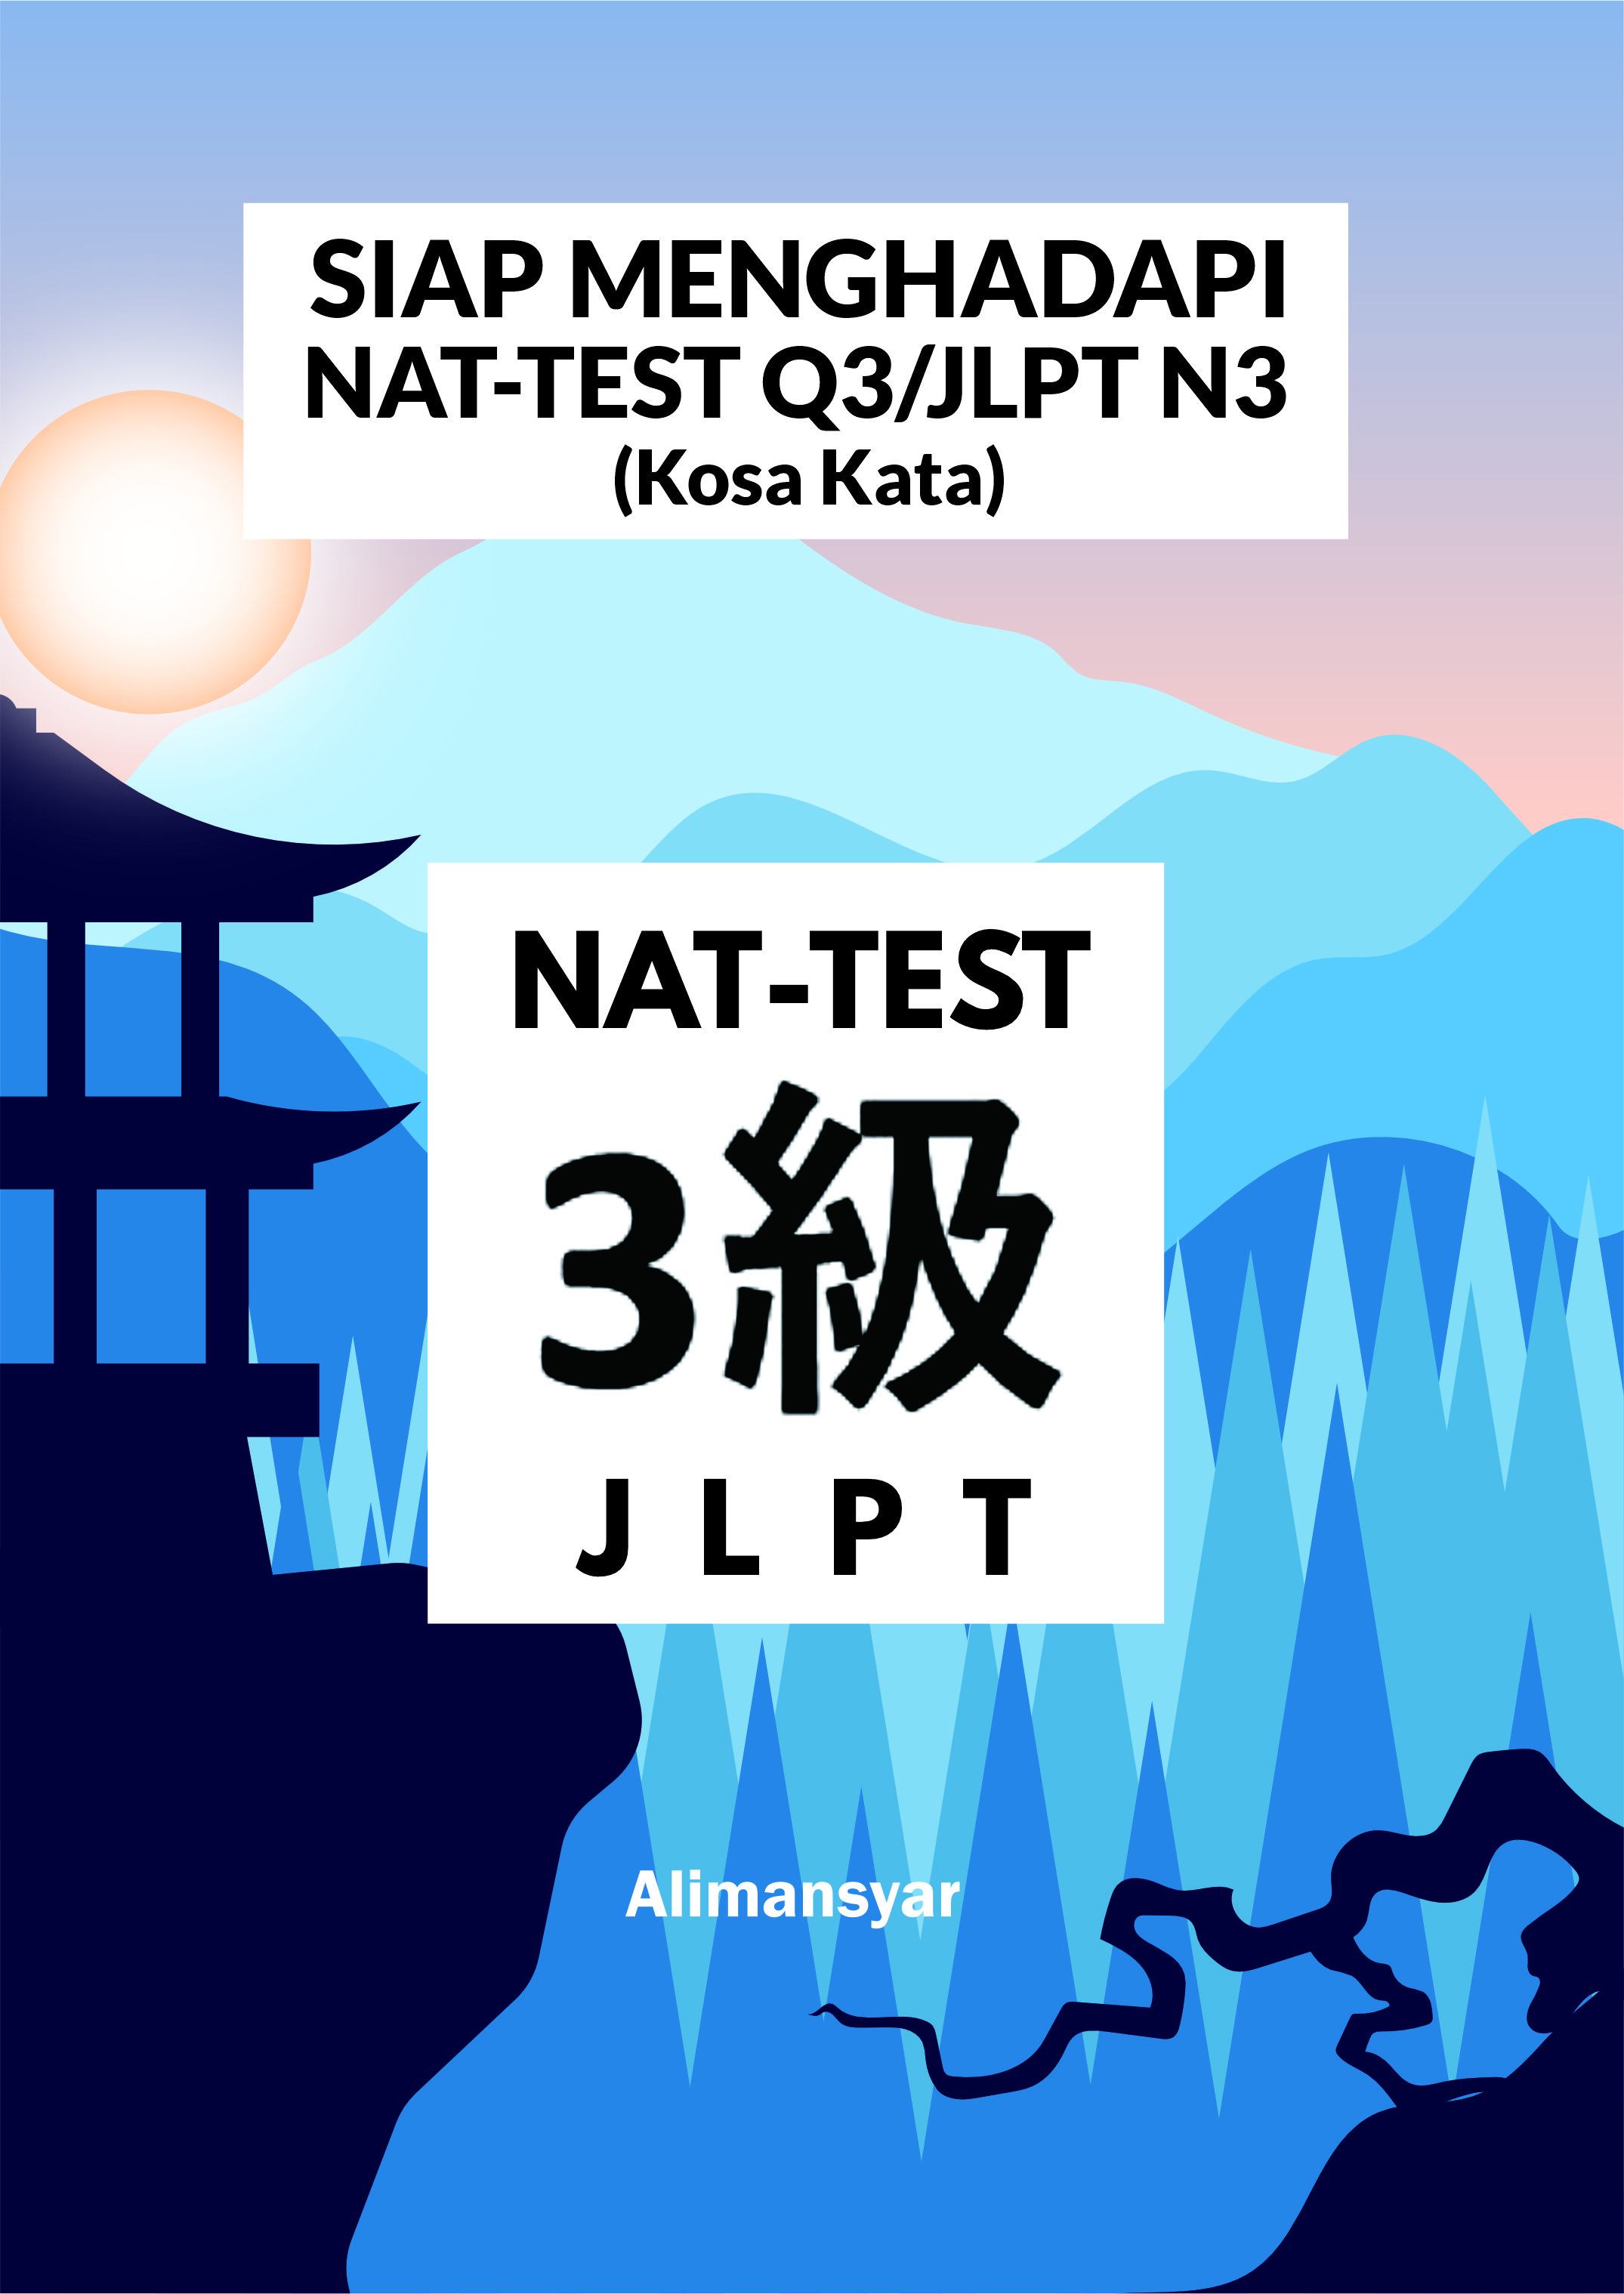 Siap Menghadapi NAT-TEST Q3/JLPT N3 (Kosa Kata)